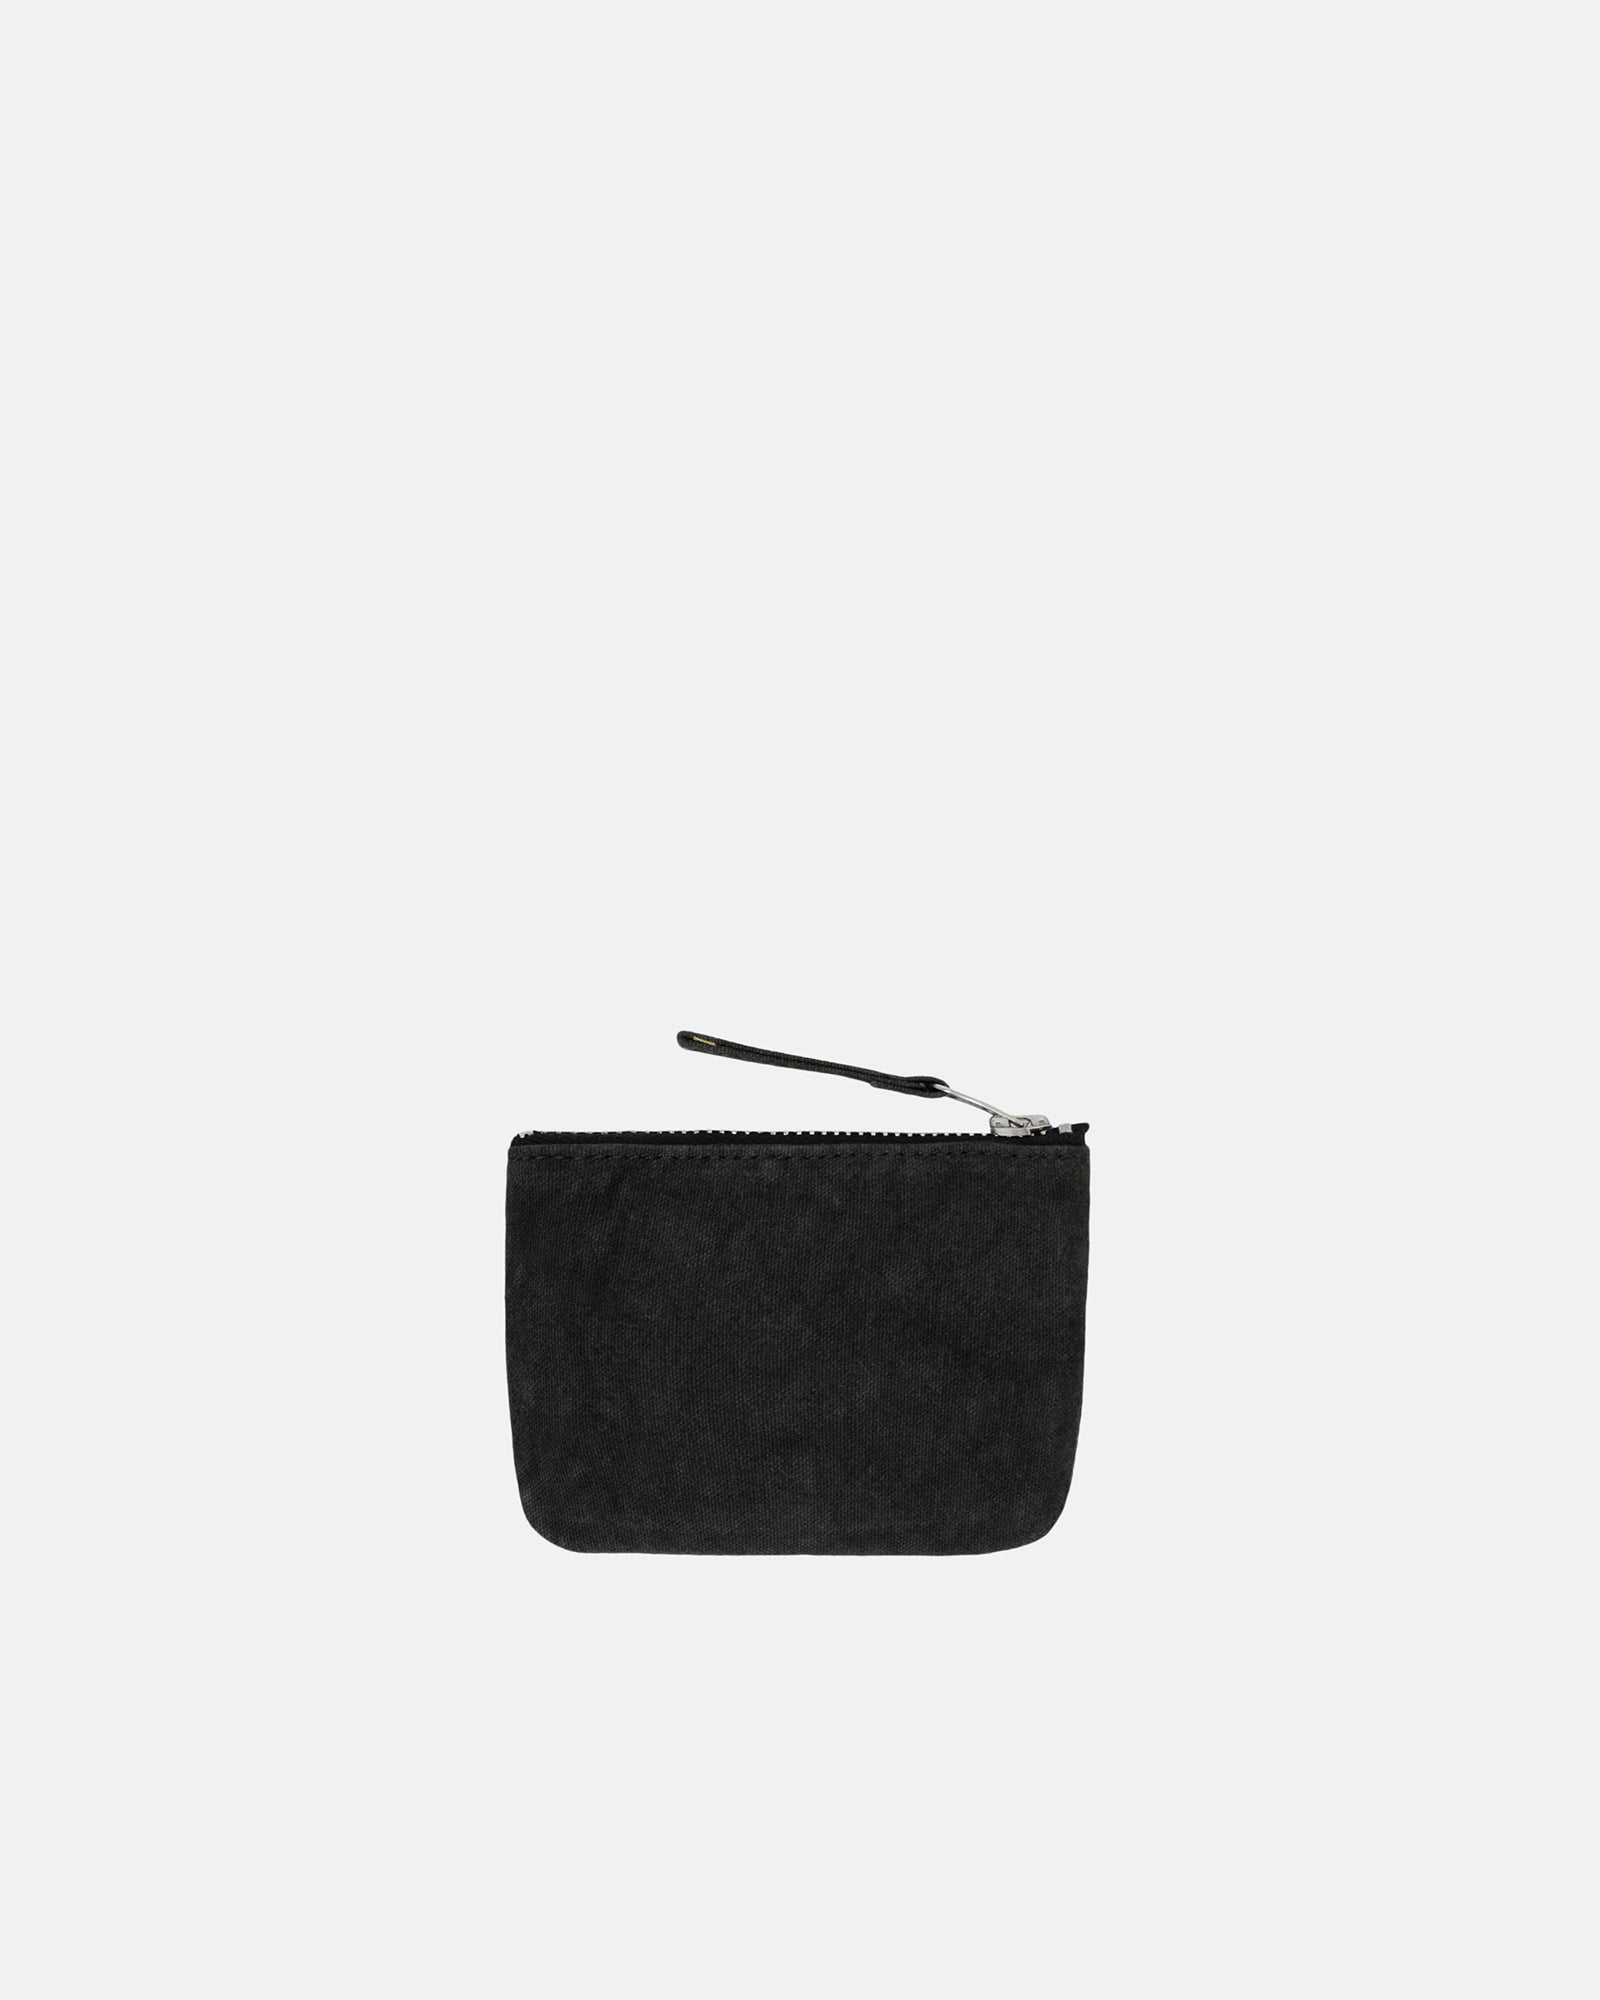 Buy Shiny Gold Clutch Purse Wallet Strapless Handbag Mod Retro Glam Disco  Evening Bag Framed Clasp Online in India - Etsy